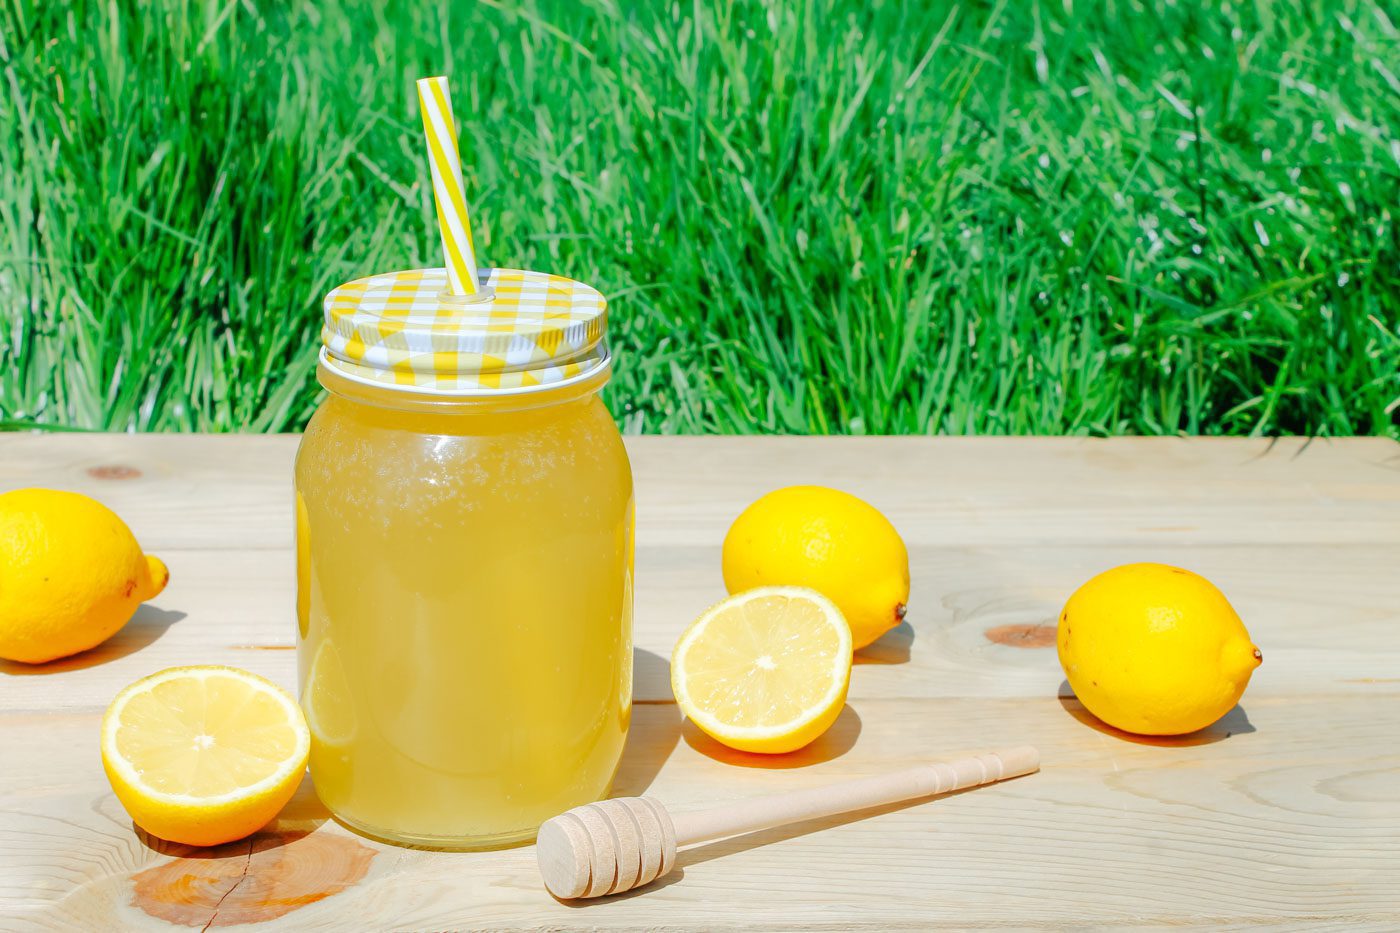 on a picnic table sits a mason jar full of lemonade